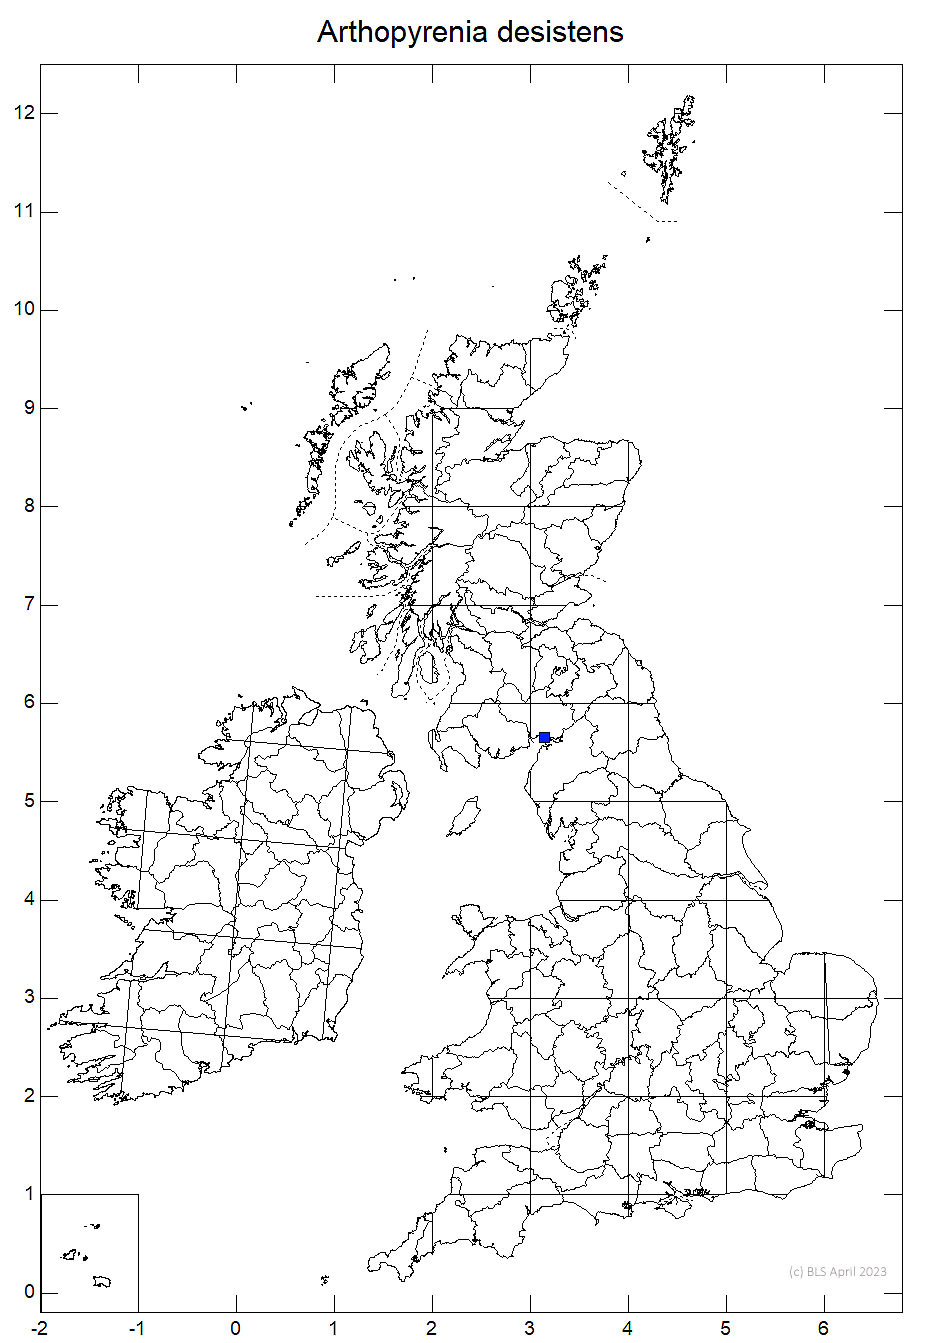 Arthopyrenia desistens 10km sq distribution map